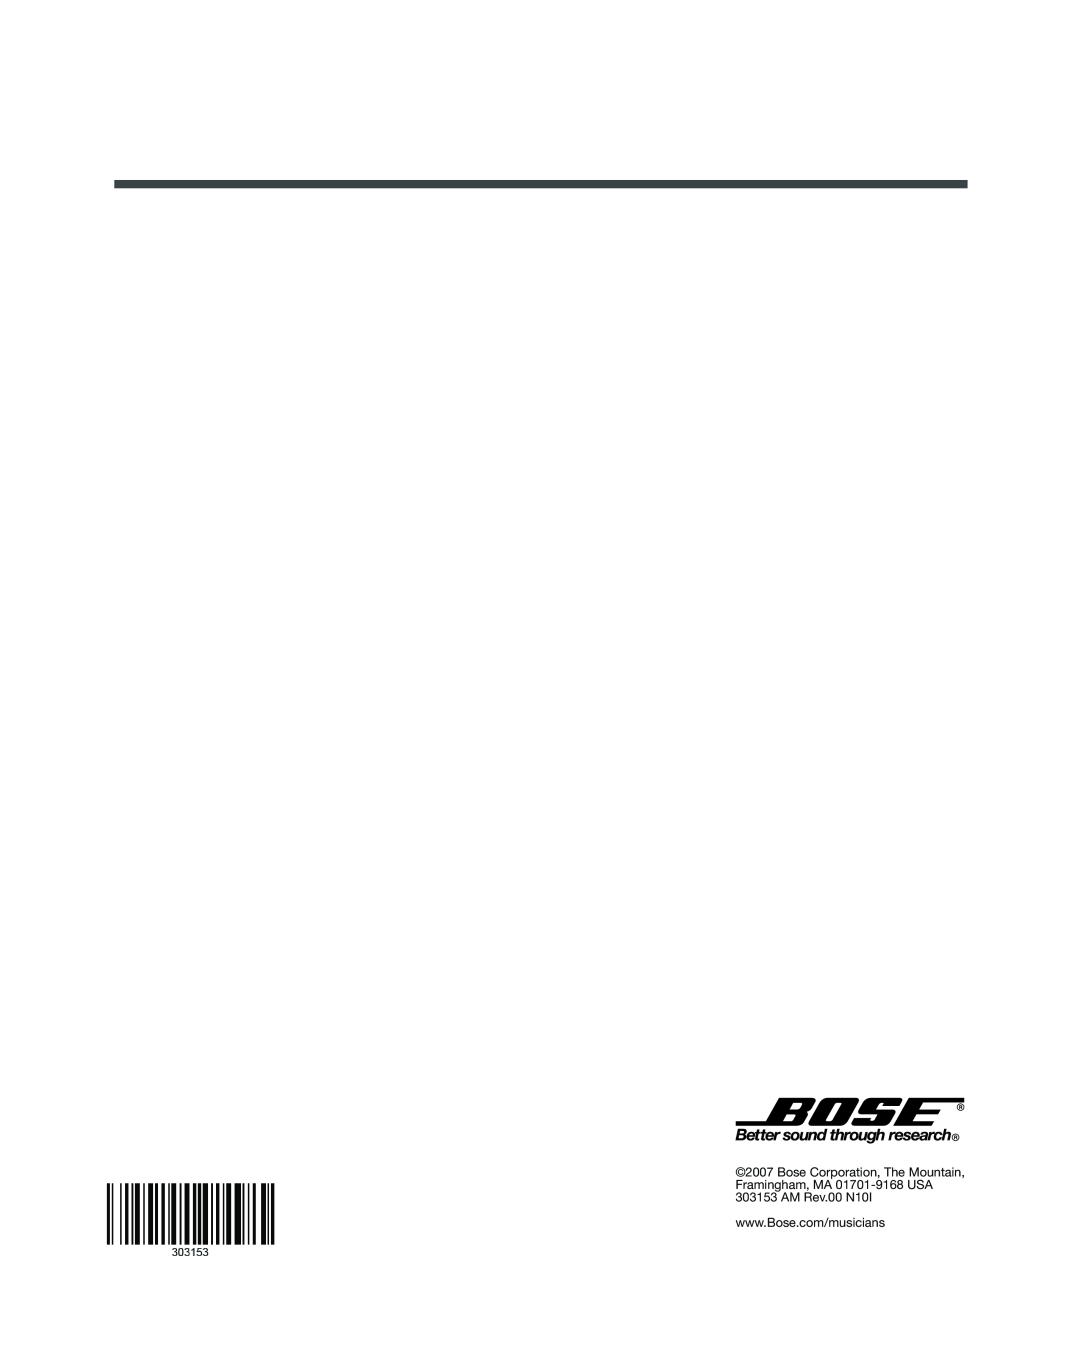 Bose L1 Model II manual Bose Corporation, The Mountain, Framingham, MA 01701-9168USA 